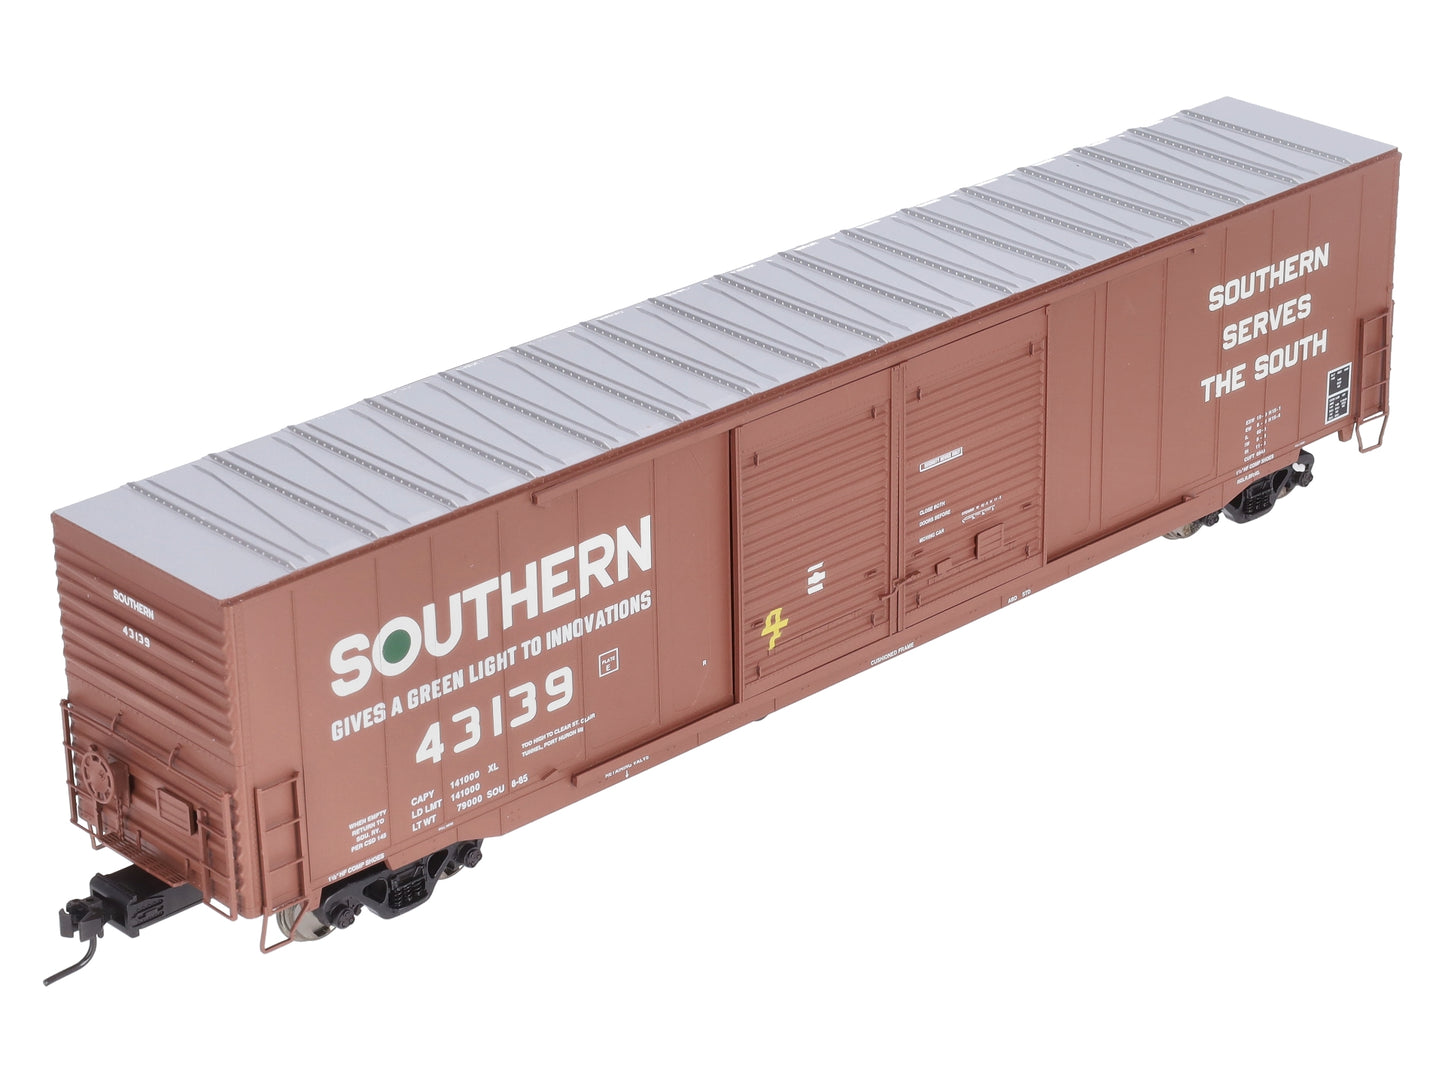 Atlas 7553-1 O Scale Southern Double Door Auto Parts Boxcar #43139 (2-Rail) LN/Box